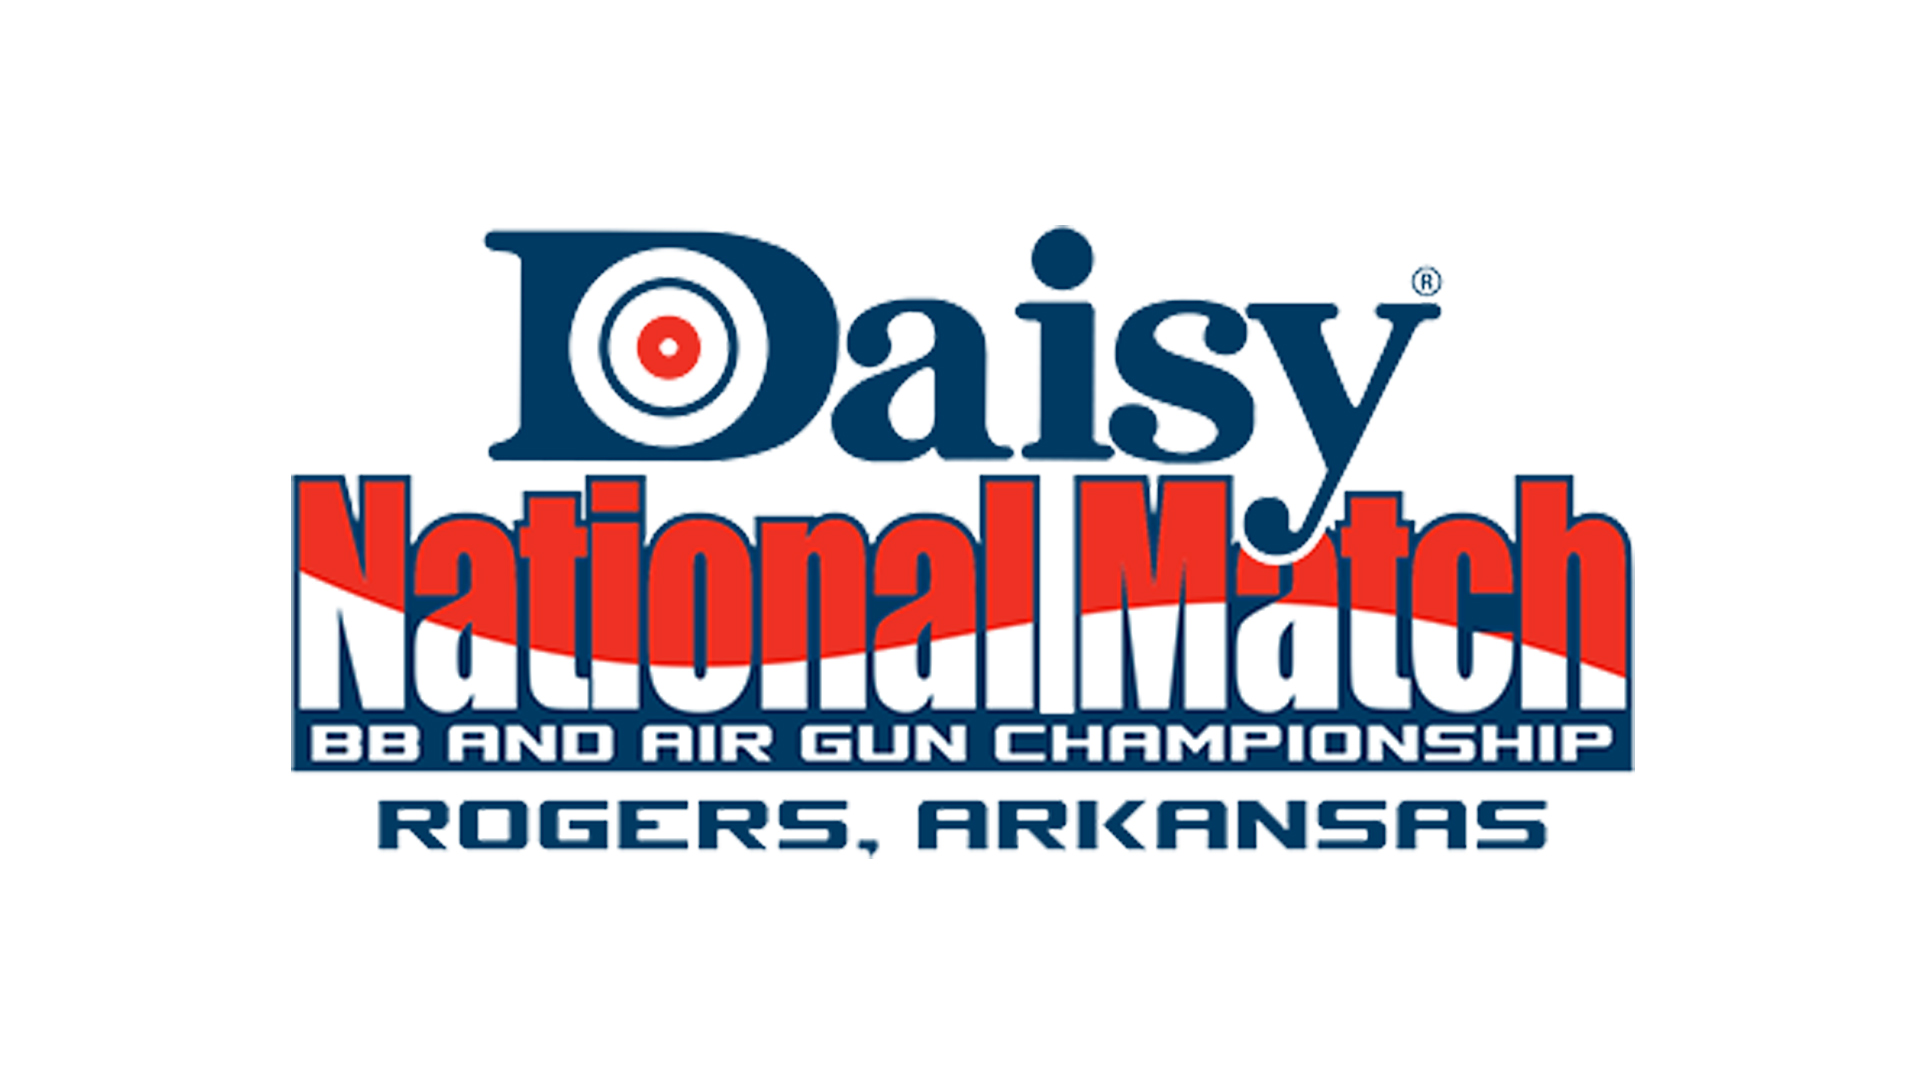 Daisy BB Gun Nationals logo